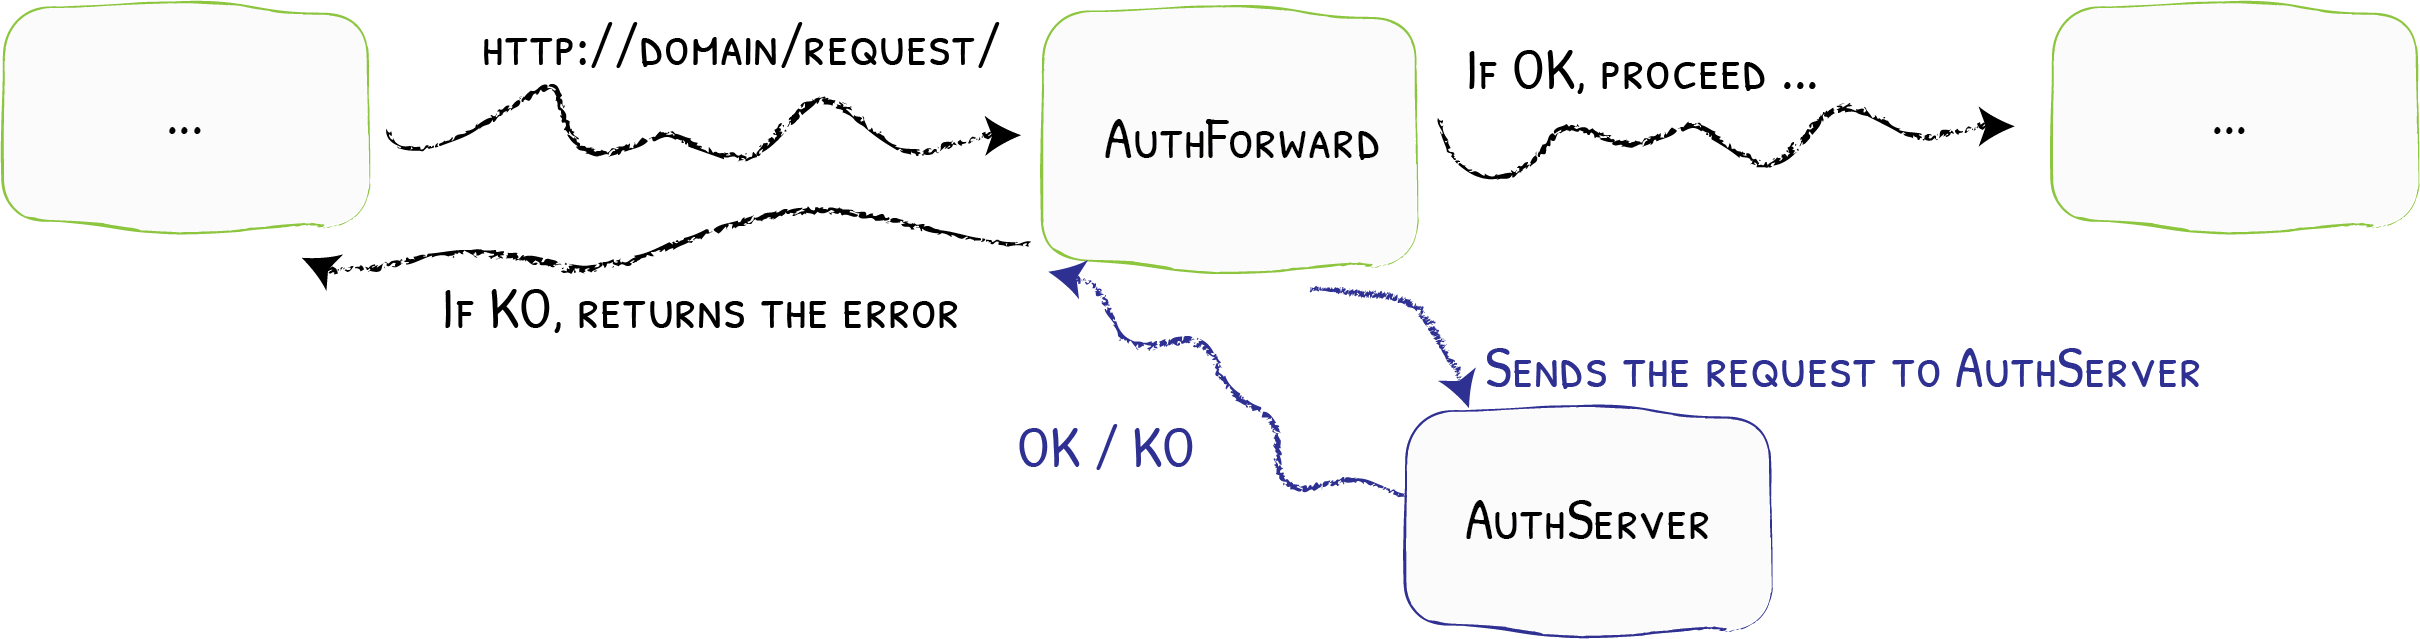 Authforward diagram